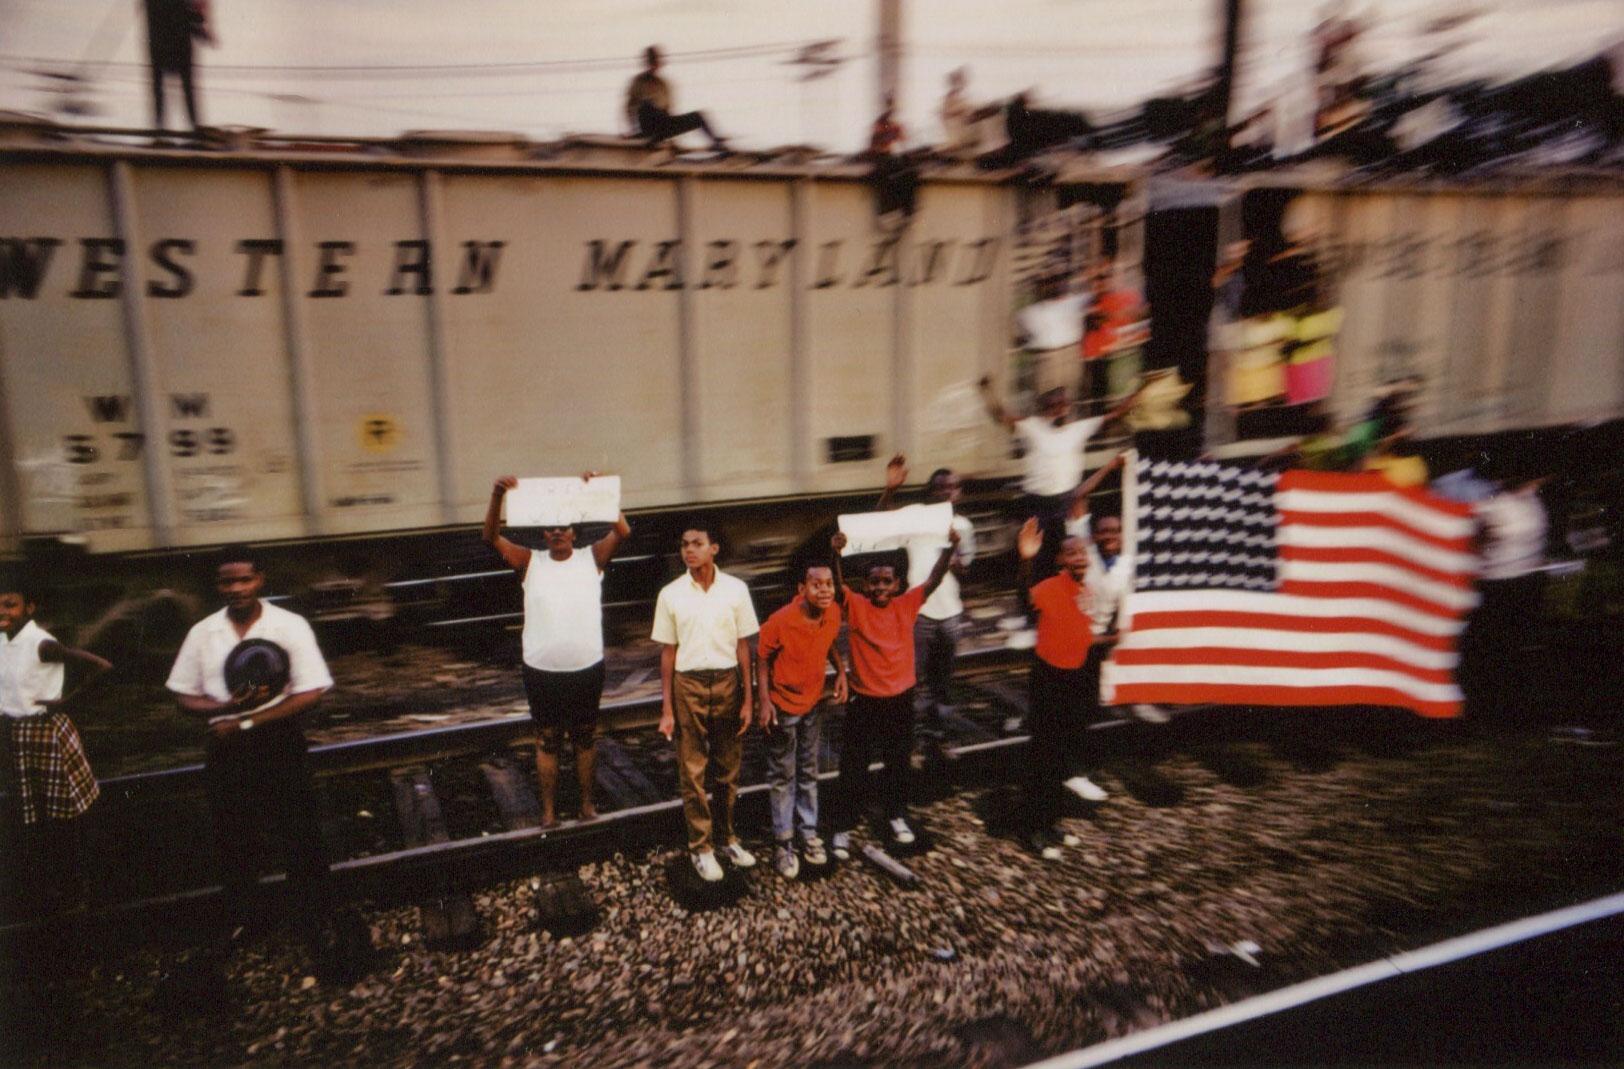 Robert Kennedy Funeral Train, USA, 1968 - Photograph by Paul Fusco